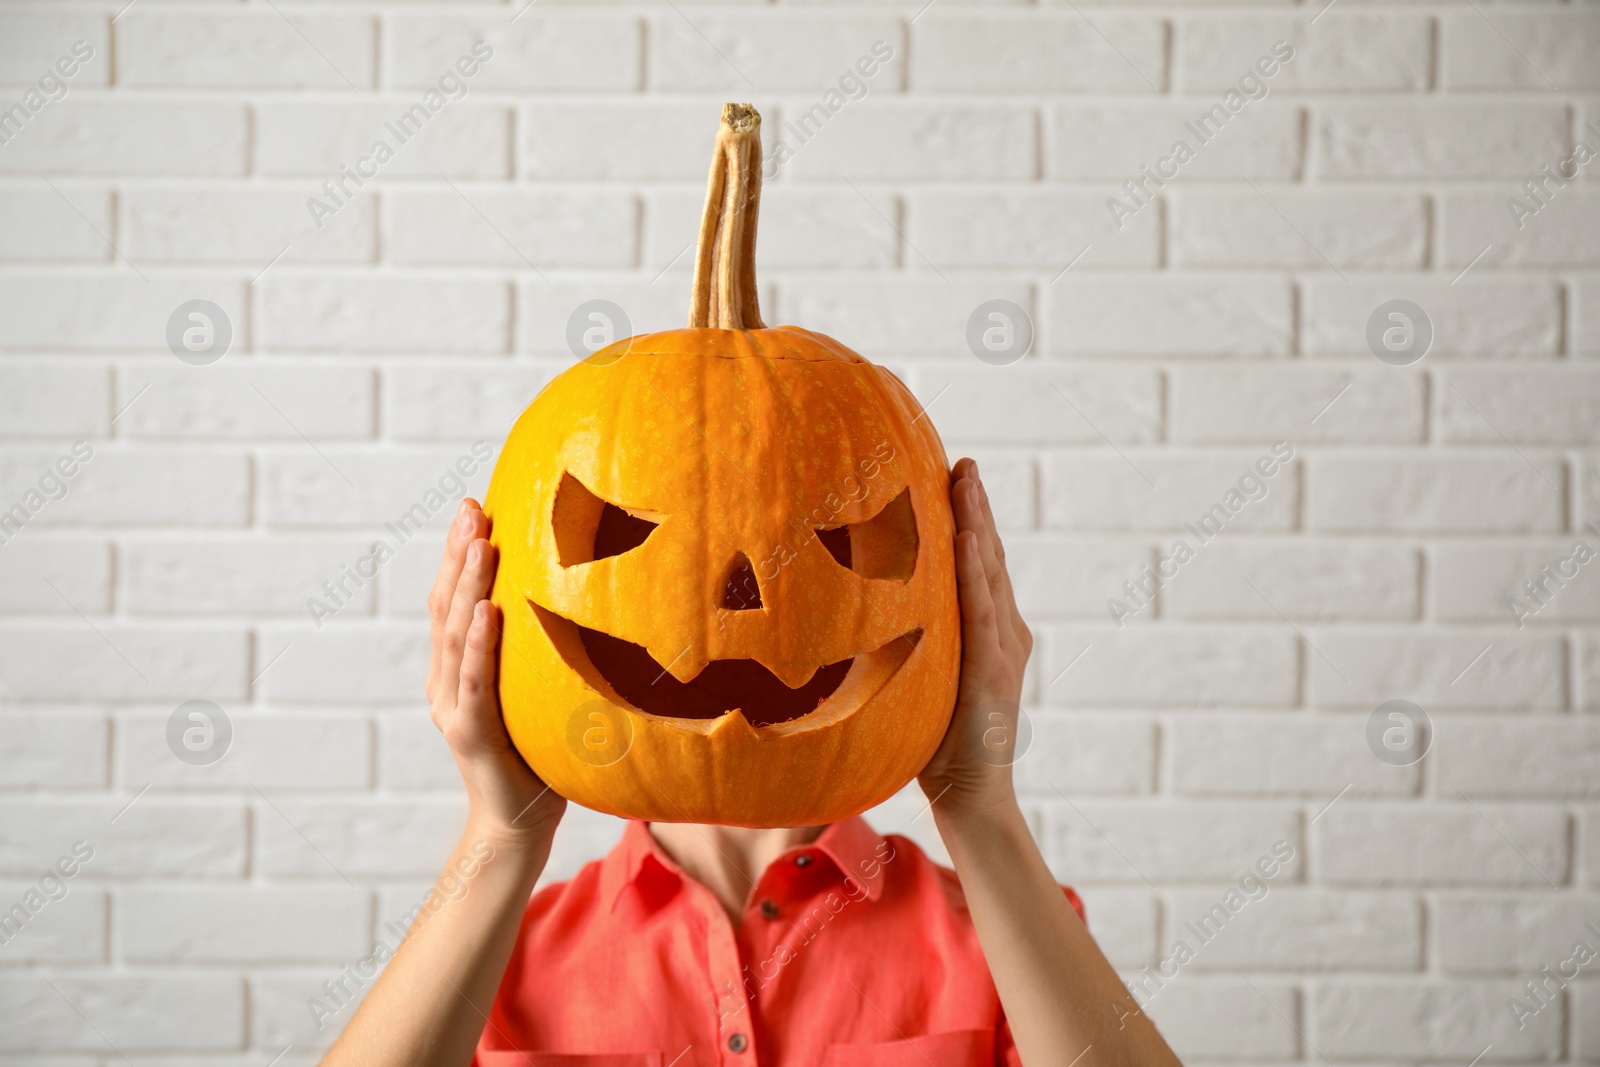 Photo of Woman with pumpkin head near white brick wall. Jack lantern - traditional Halloween decor